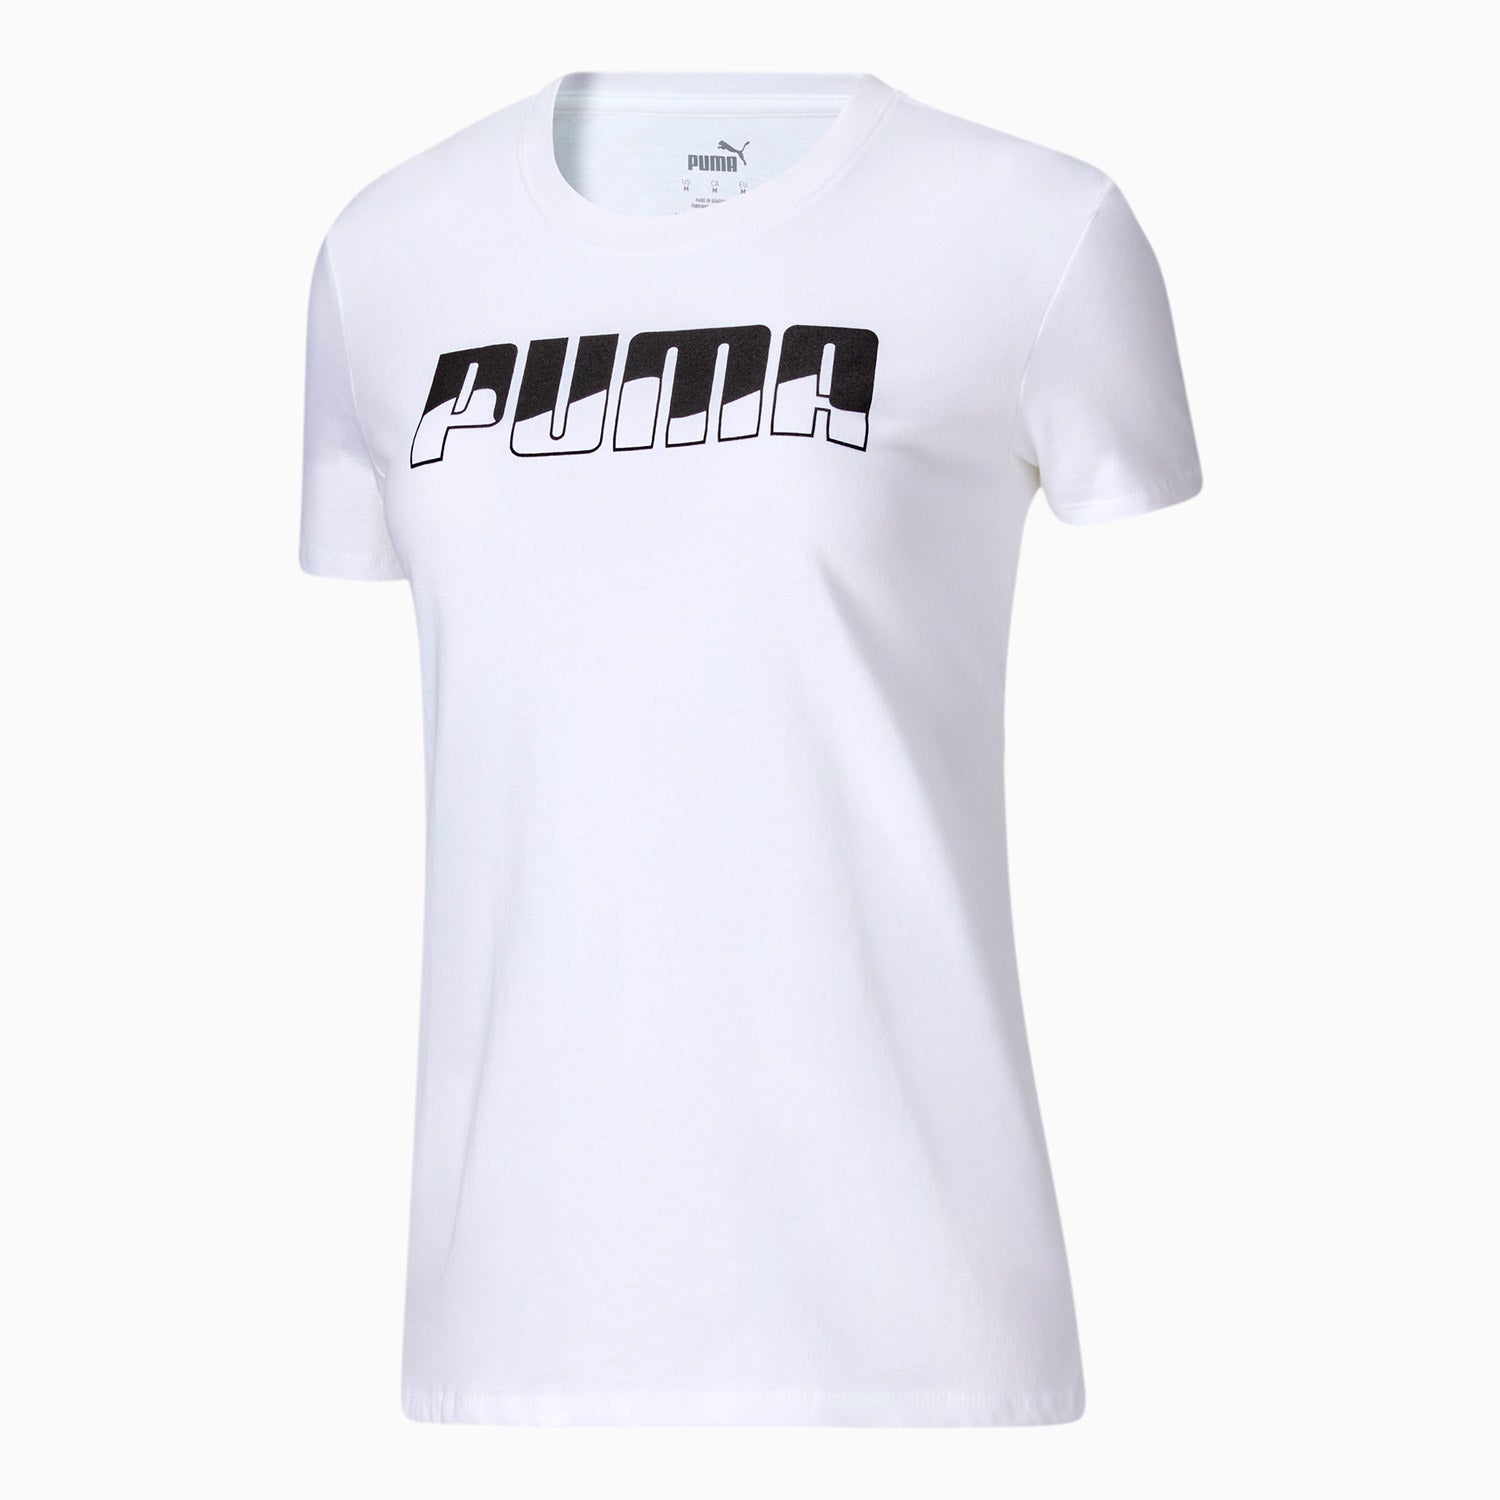 puma-womens-rebel-graphic-short-sleeve-t-shirt-585979-02